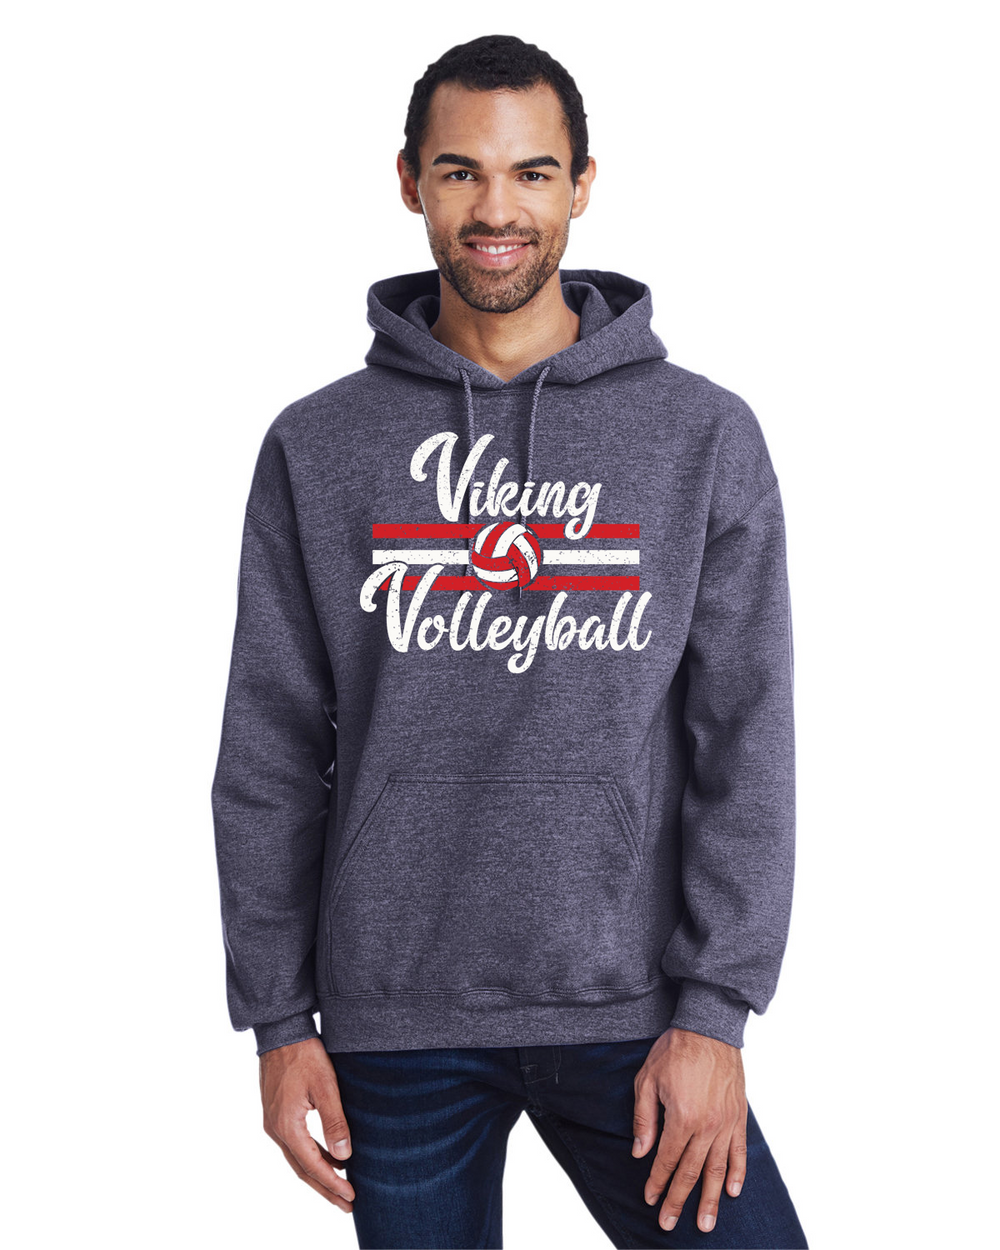 SMS Volleyball - Gildan Adult Heavy Blend 50/50 Hooded Sweatshirt - G185